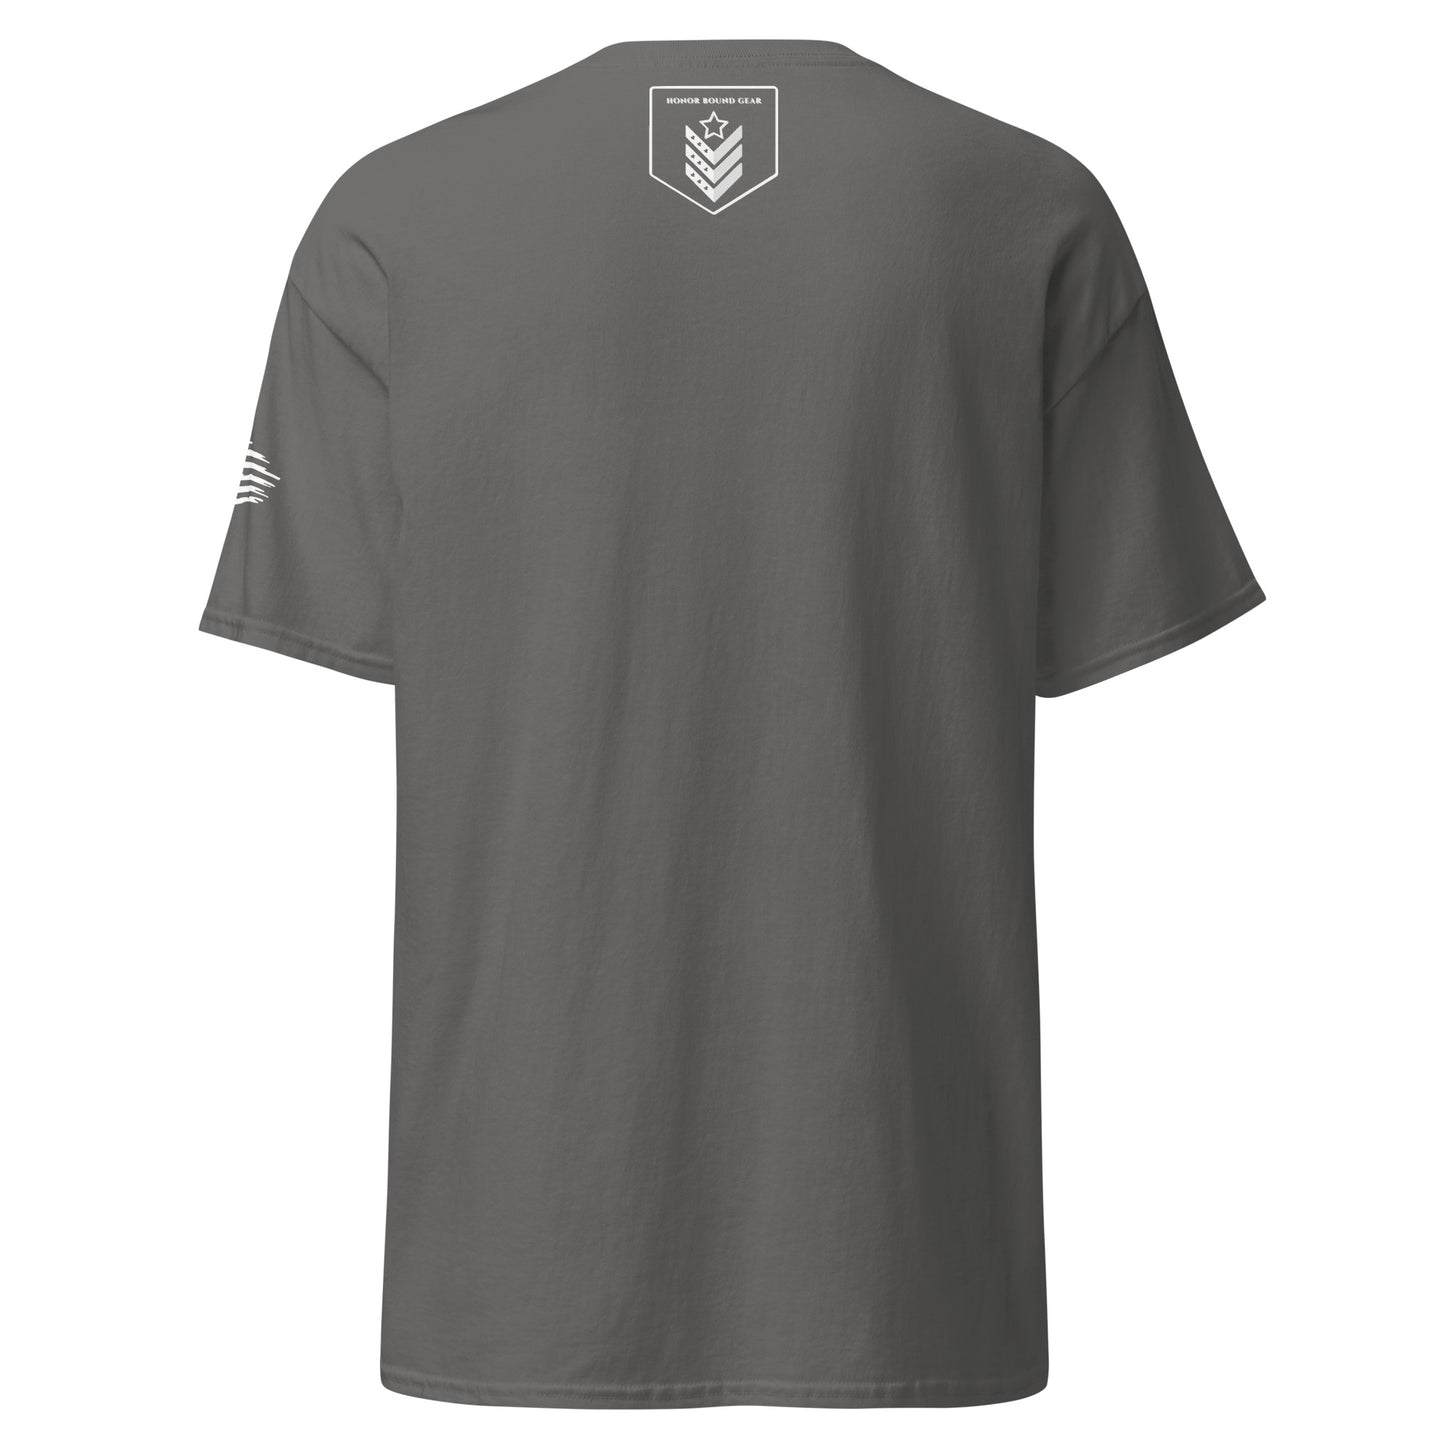 Honor Bound Gear "Proud Veteran" Men's T-Shirt